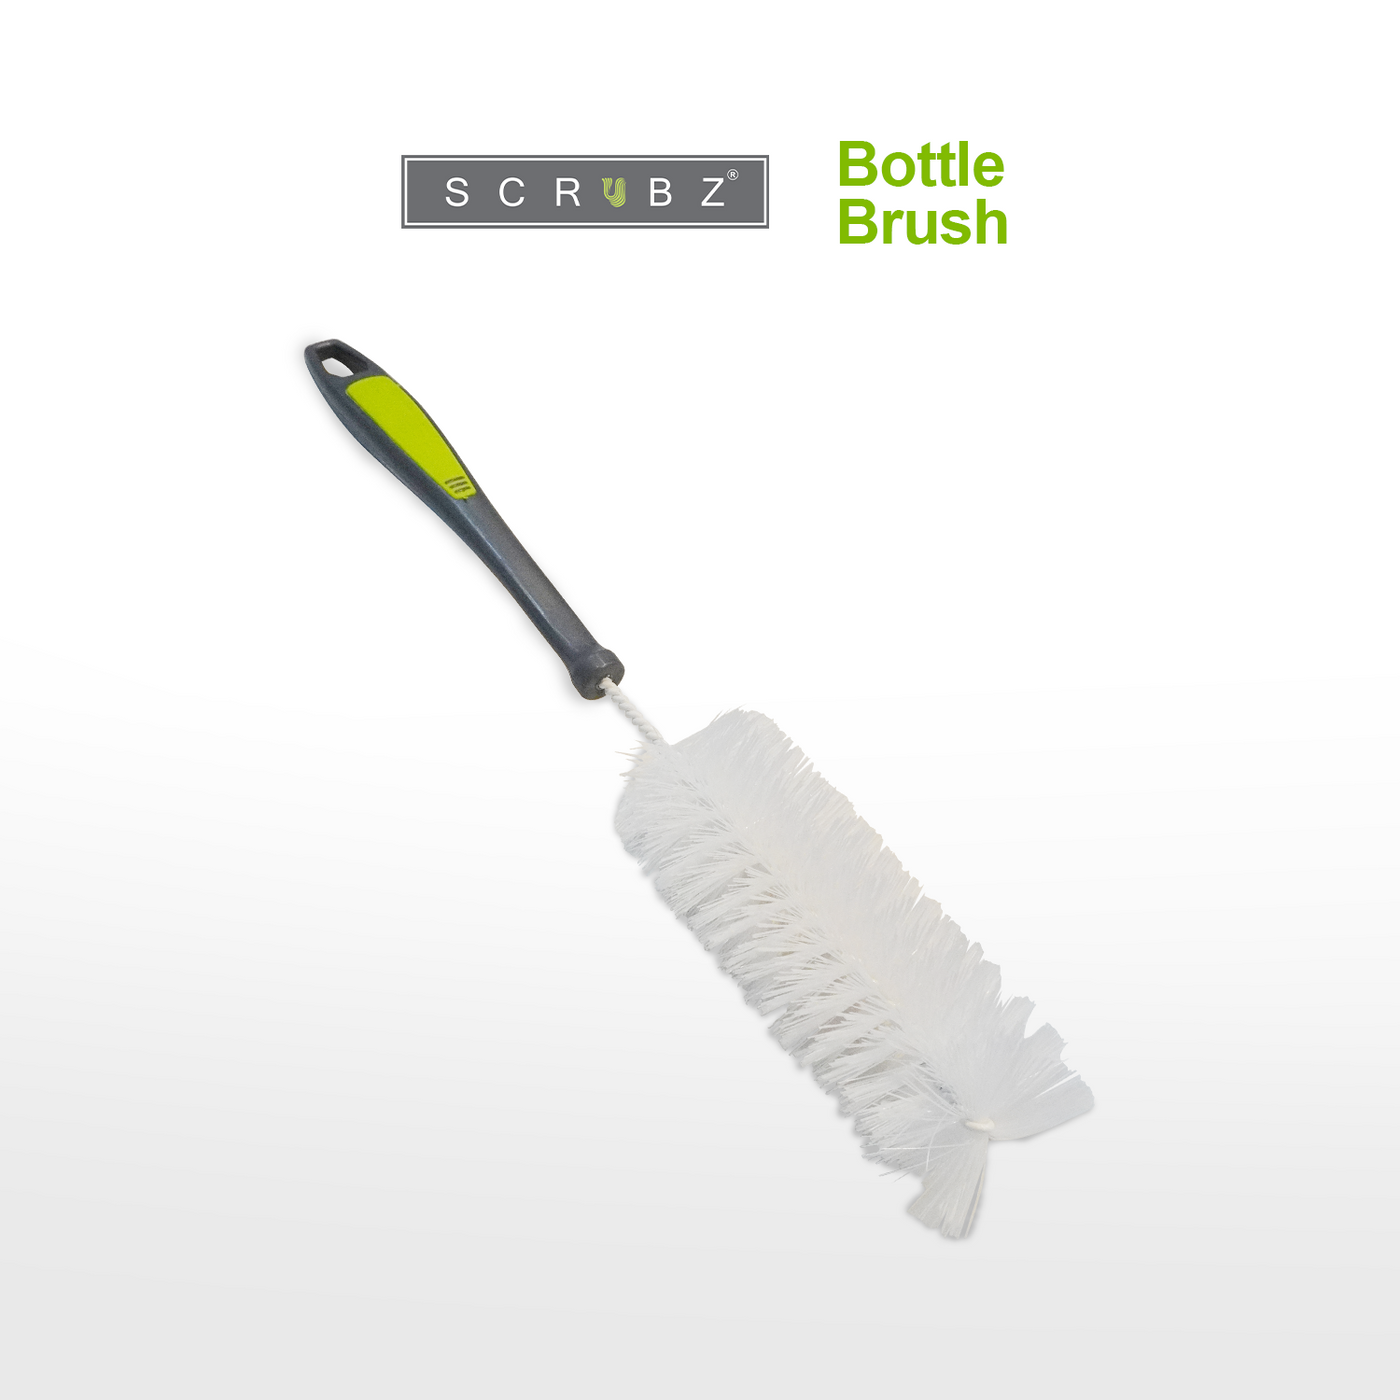 SCRUBZ Premium Bottle Brush